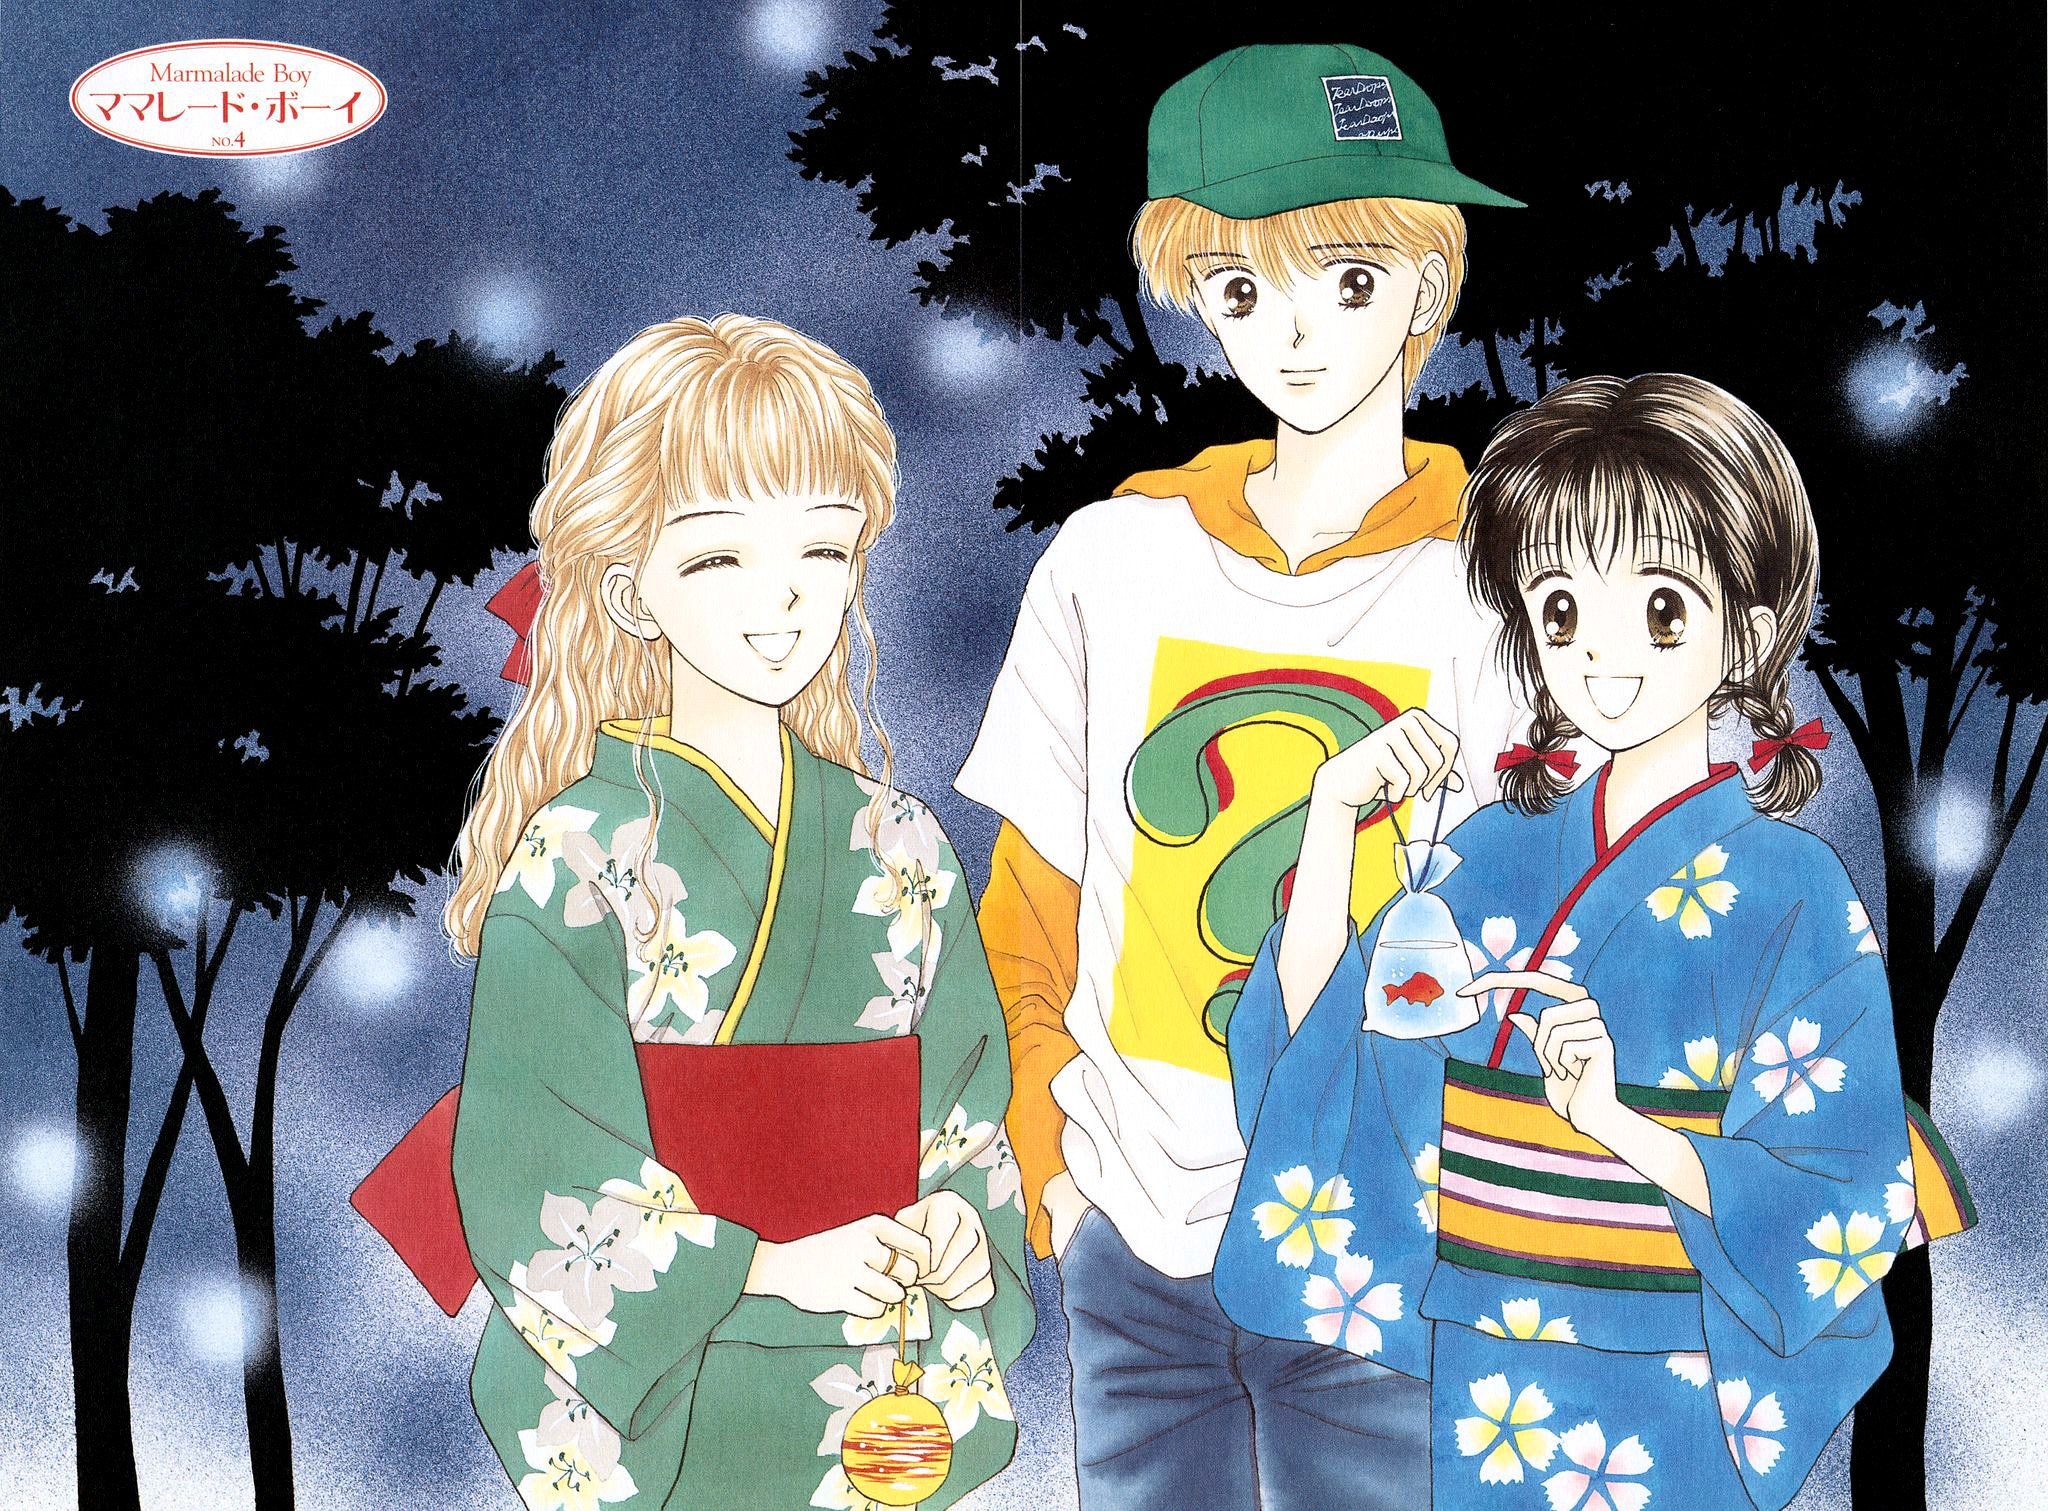 Marmalade Boy Wallpaper Anime Image Board